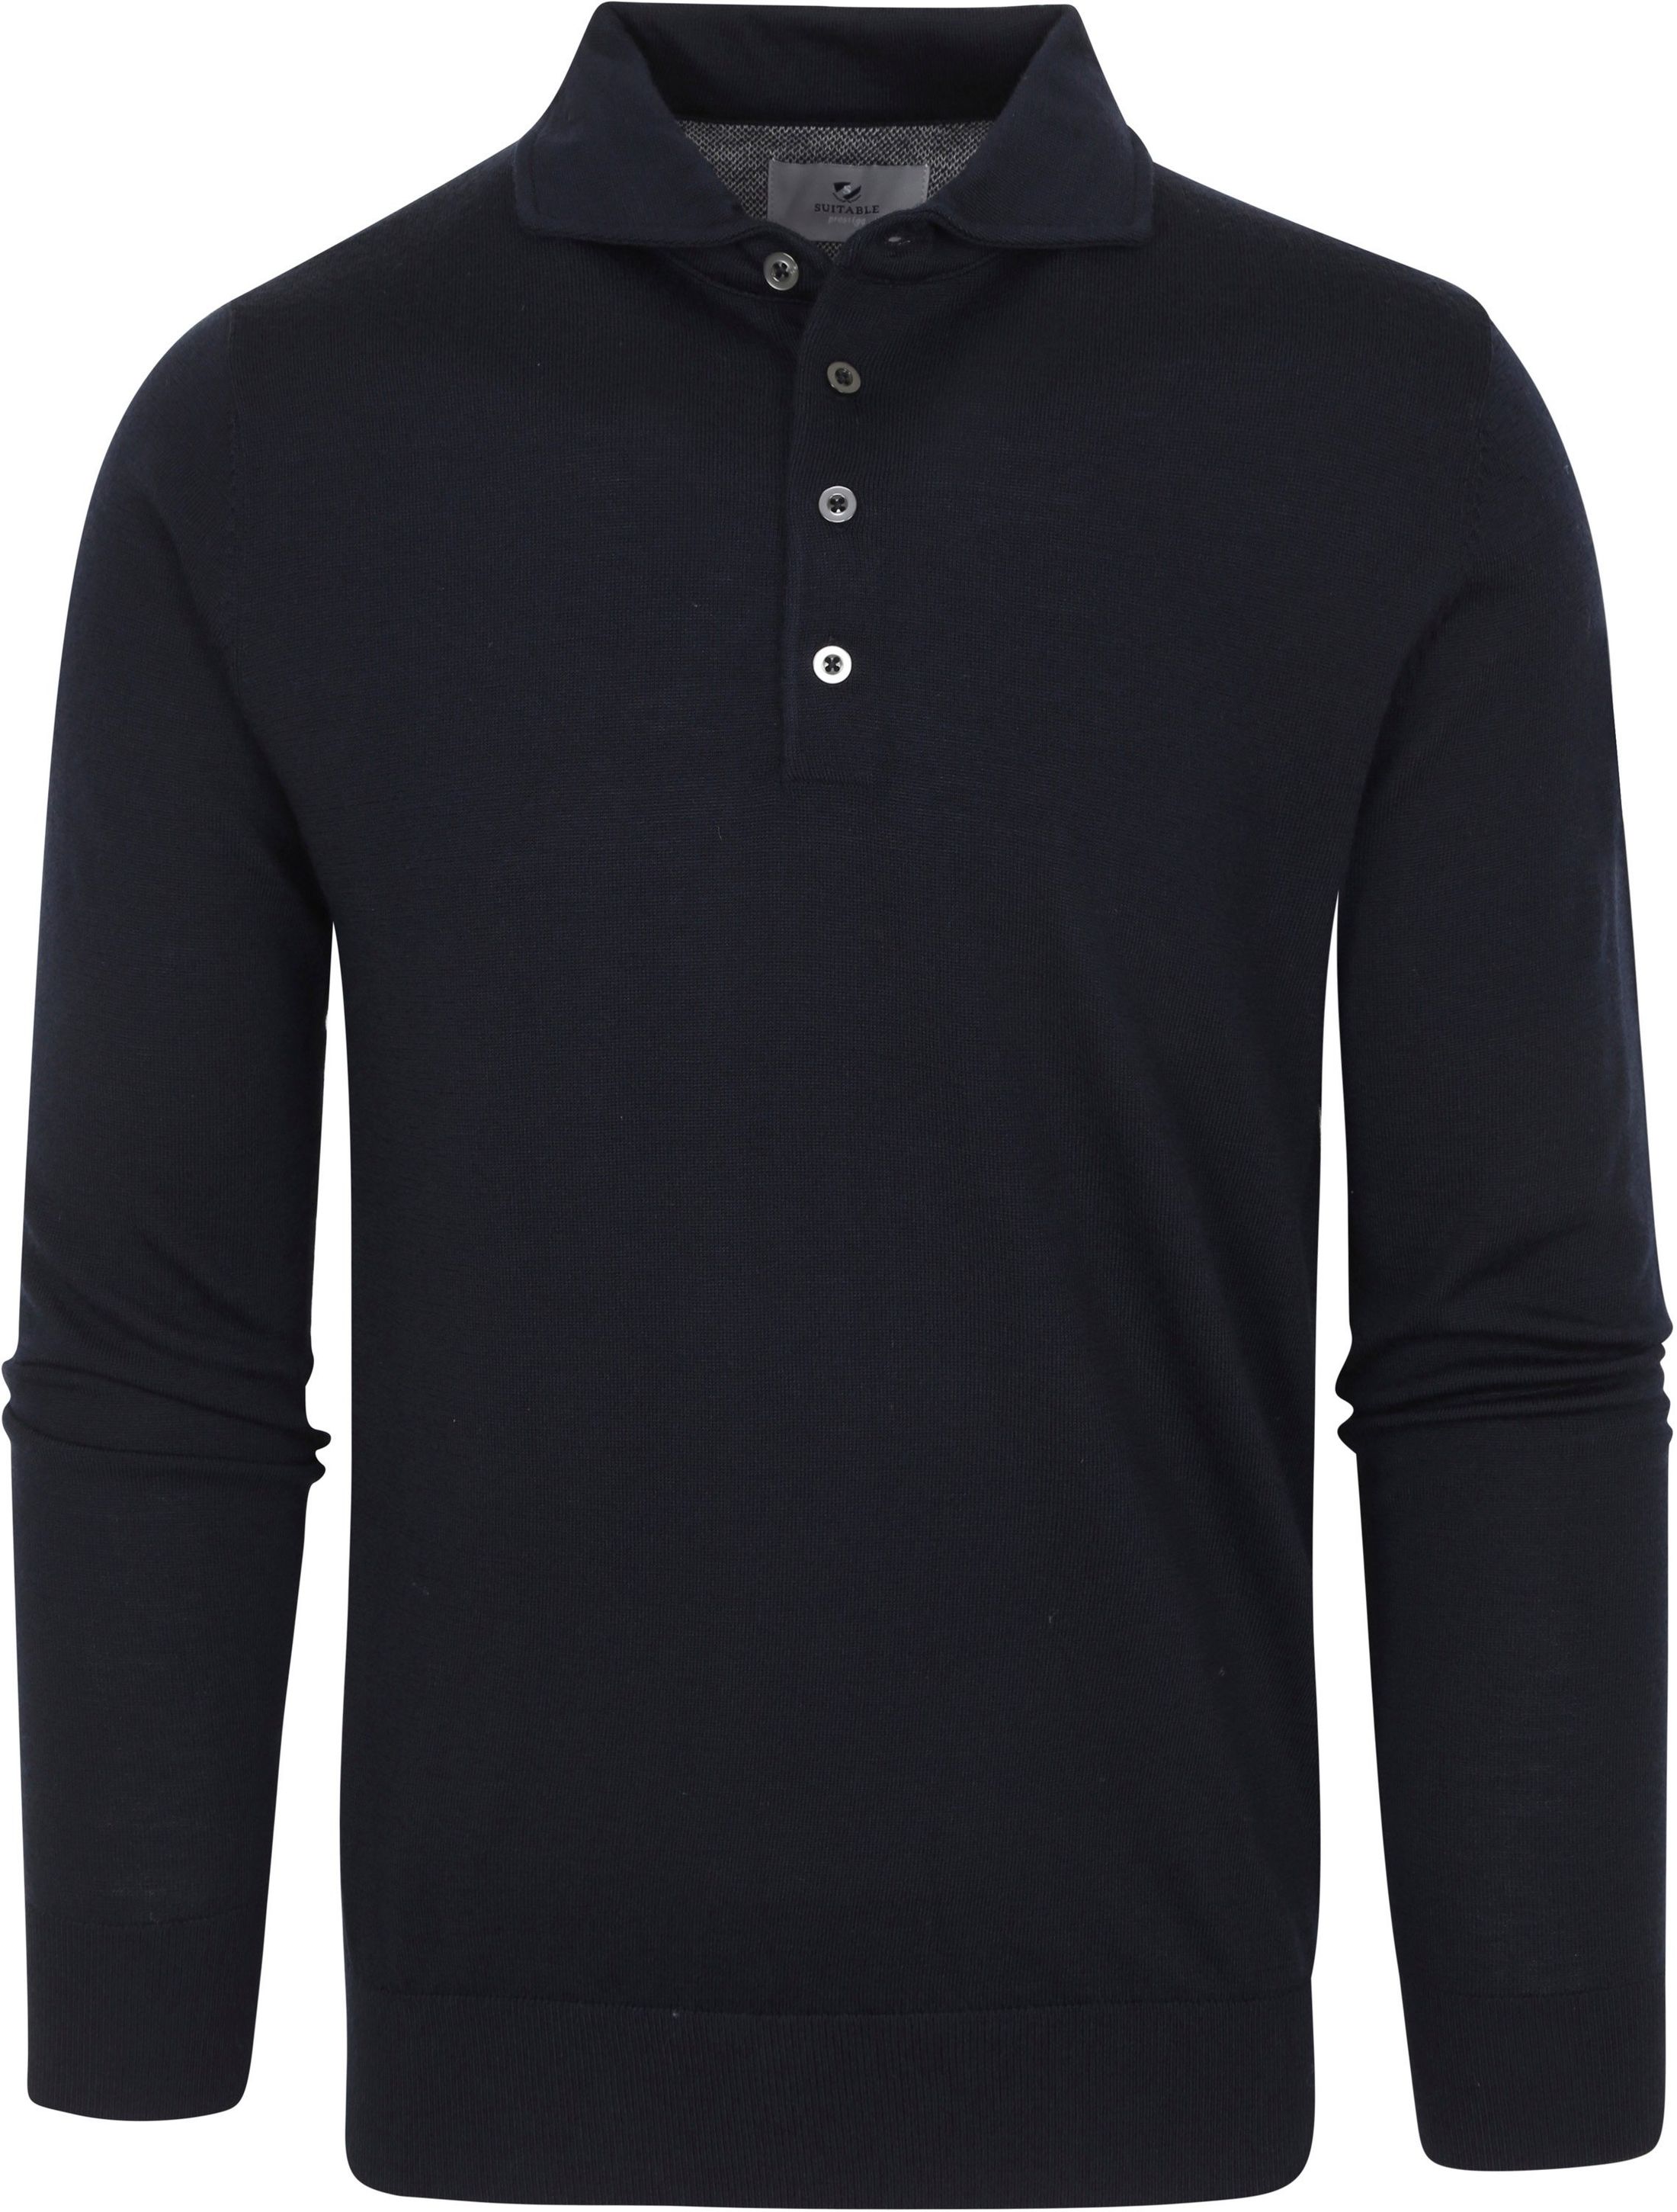 Suitable Prestige Polo Shirt Merino Wool Navy Blue Dark Blue size L